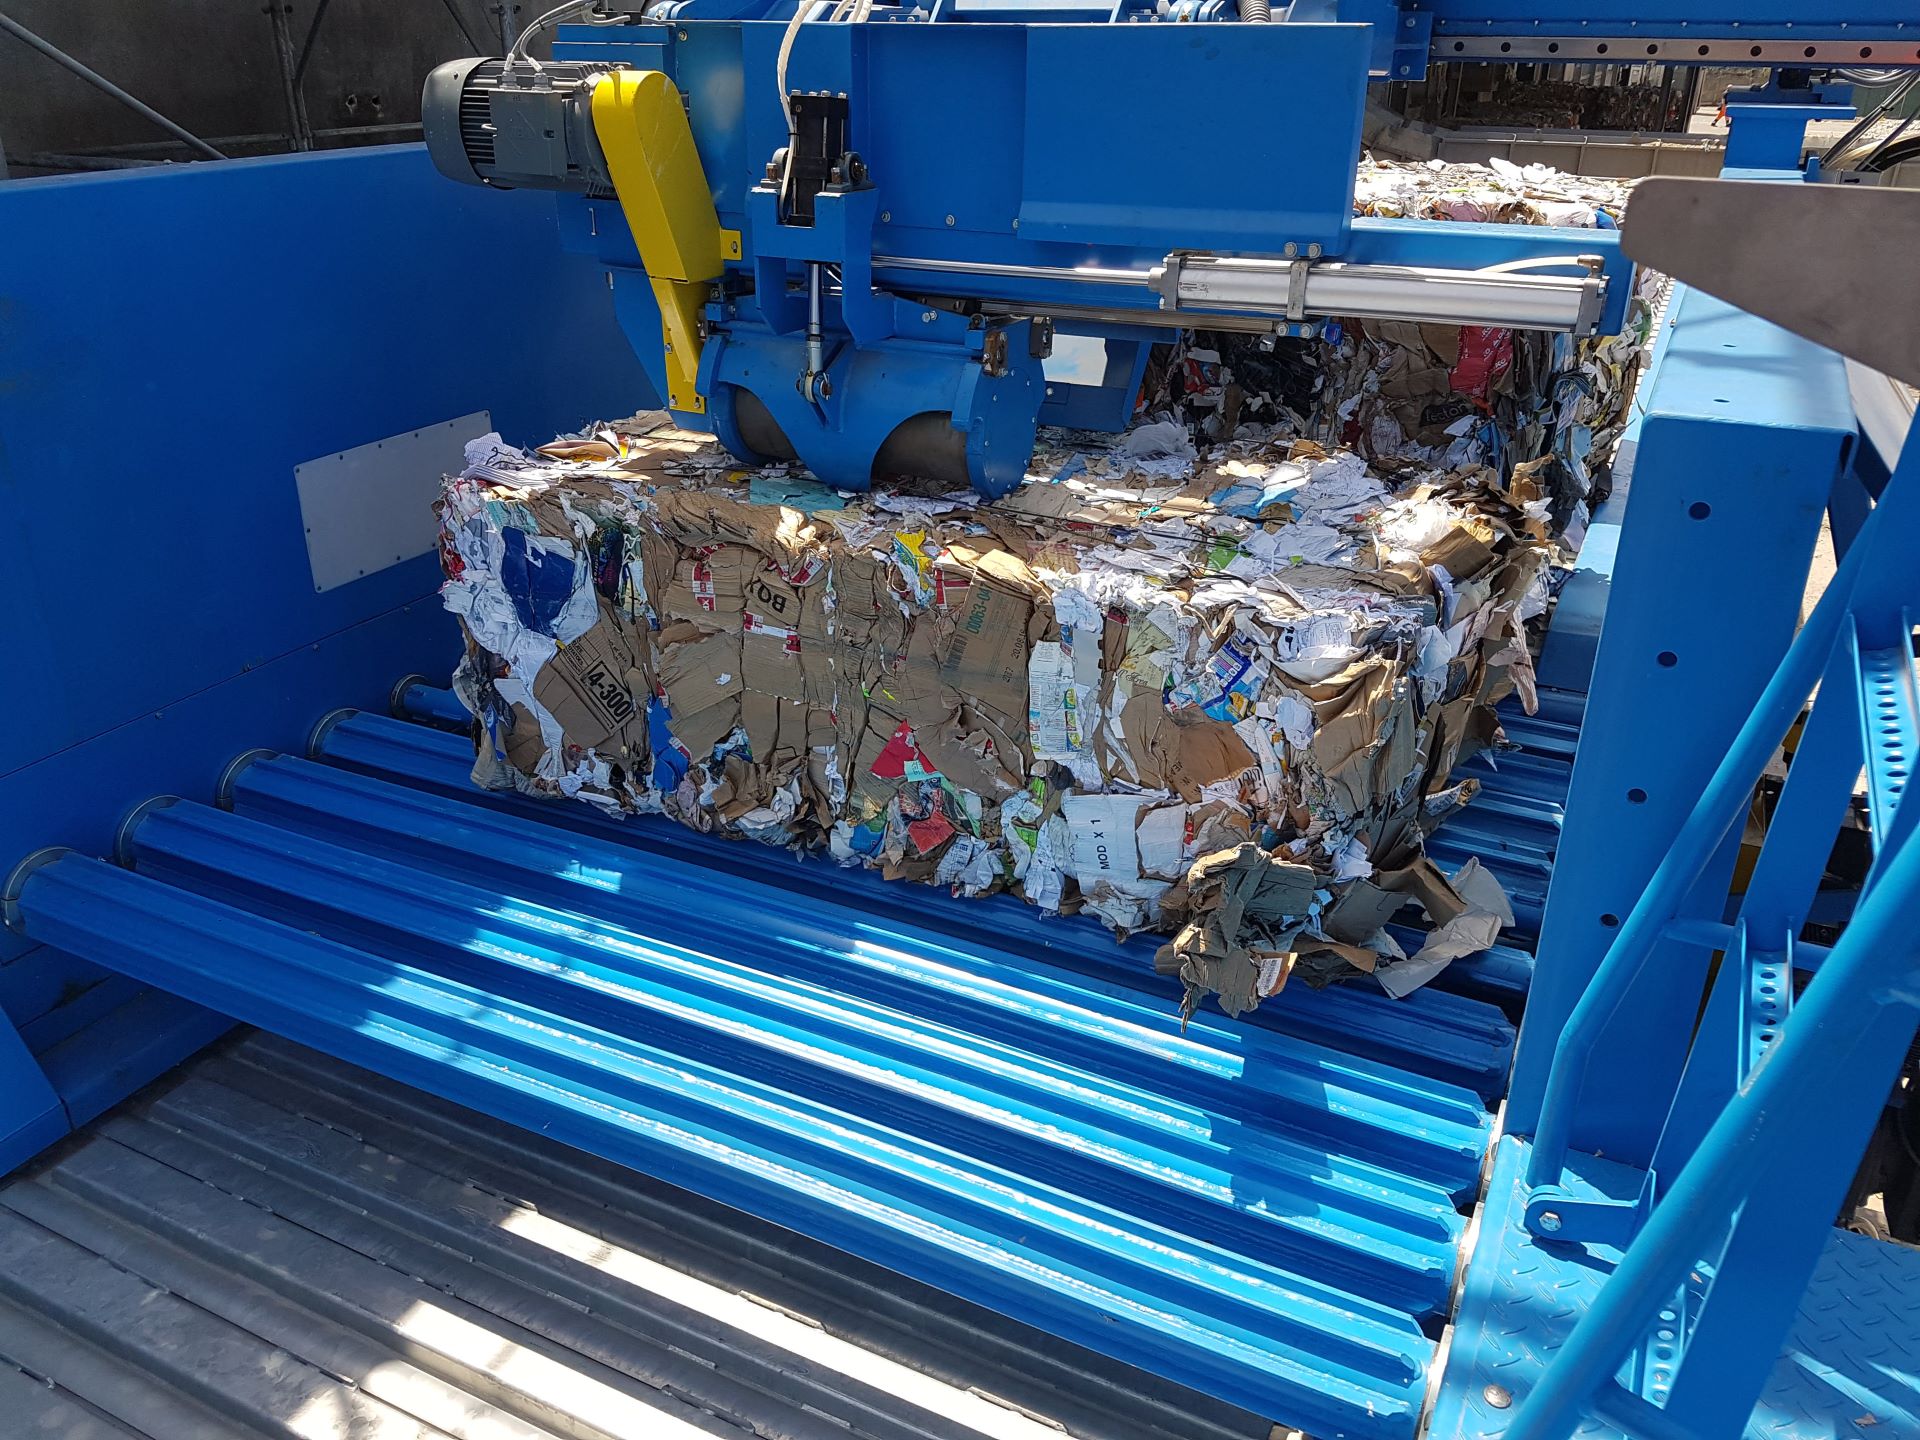 FMW Automatic Wastepaper Bale Dewiring Extractor dewriring a wastepaper bale